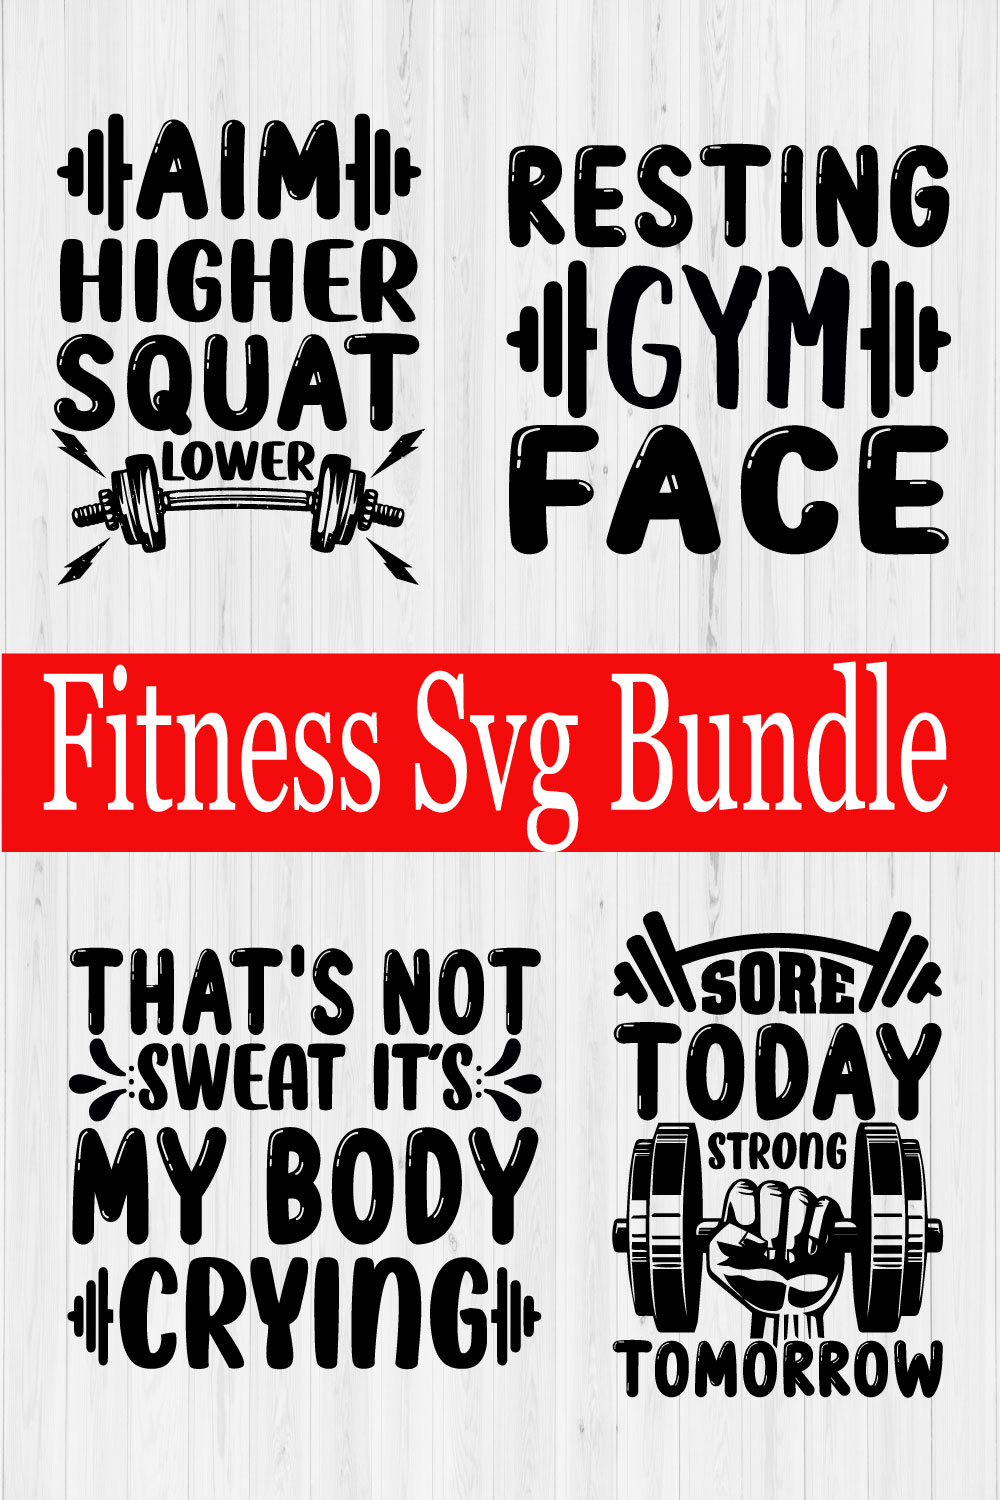 Fitness Svg Bundle Vol1 pinterest preview image.